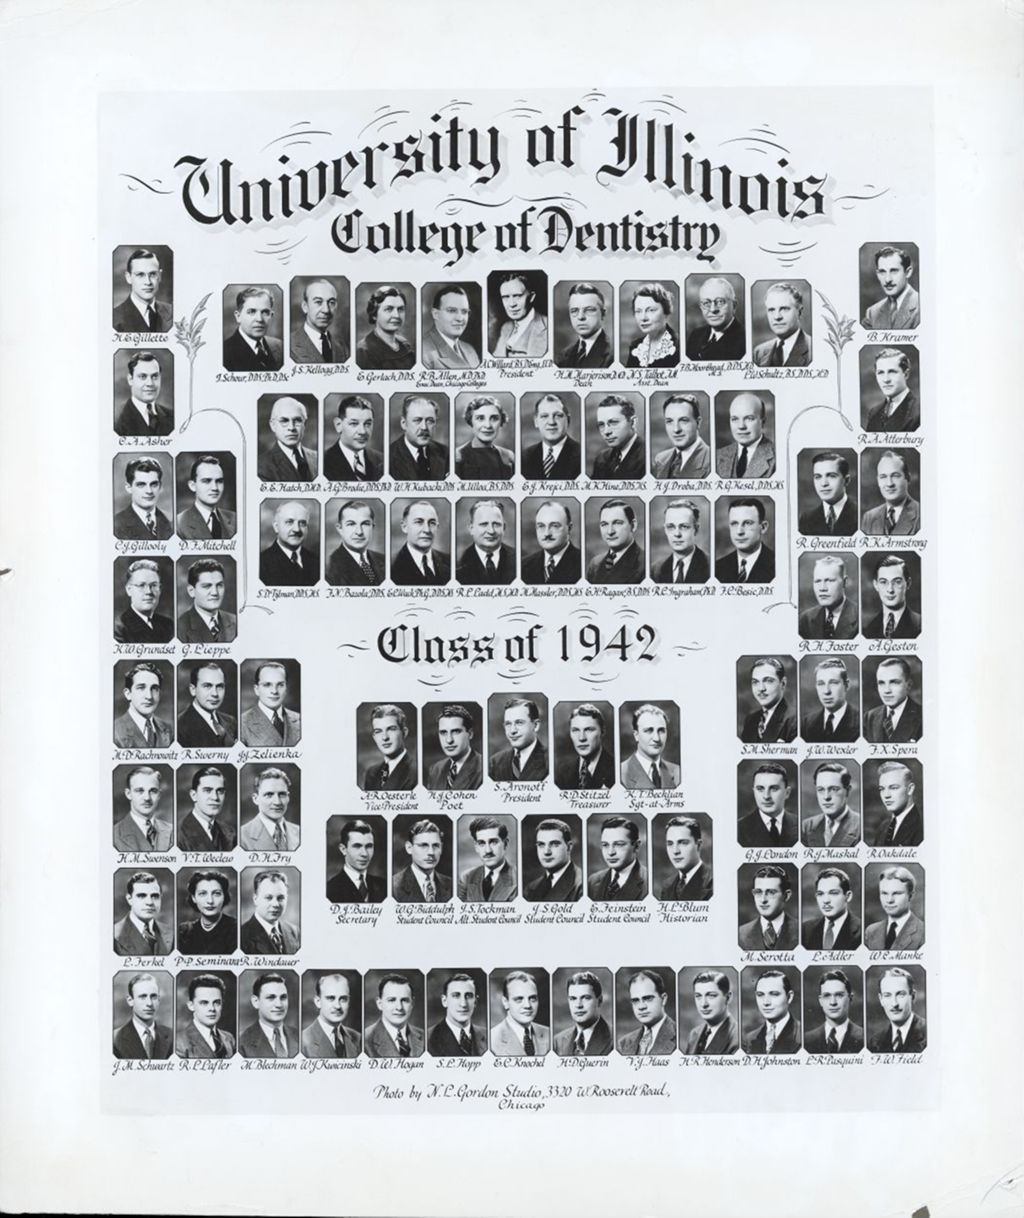 Miniature of 1942 graduating class, University of Illinois College of Dentistry